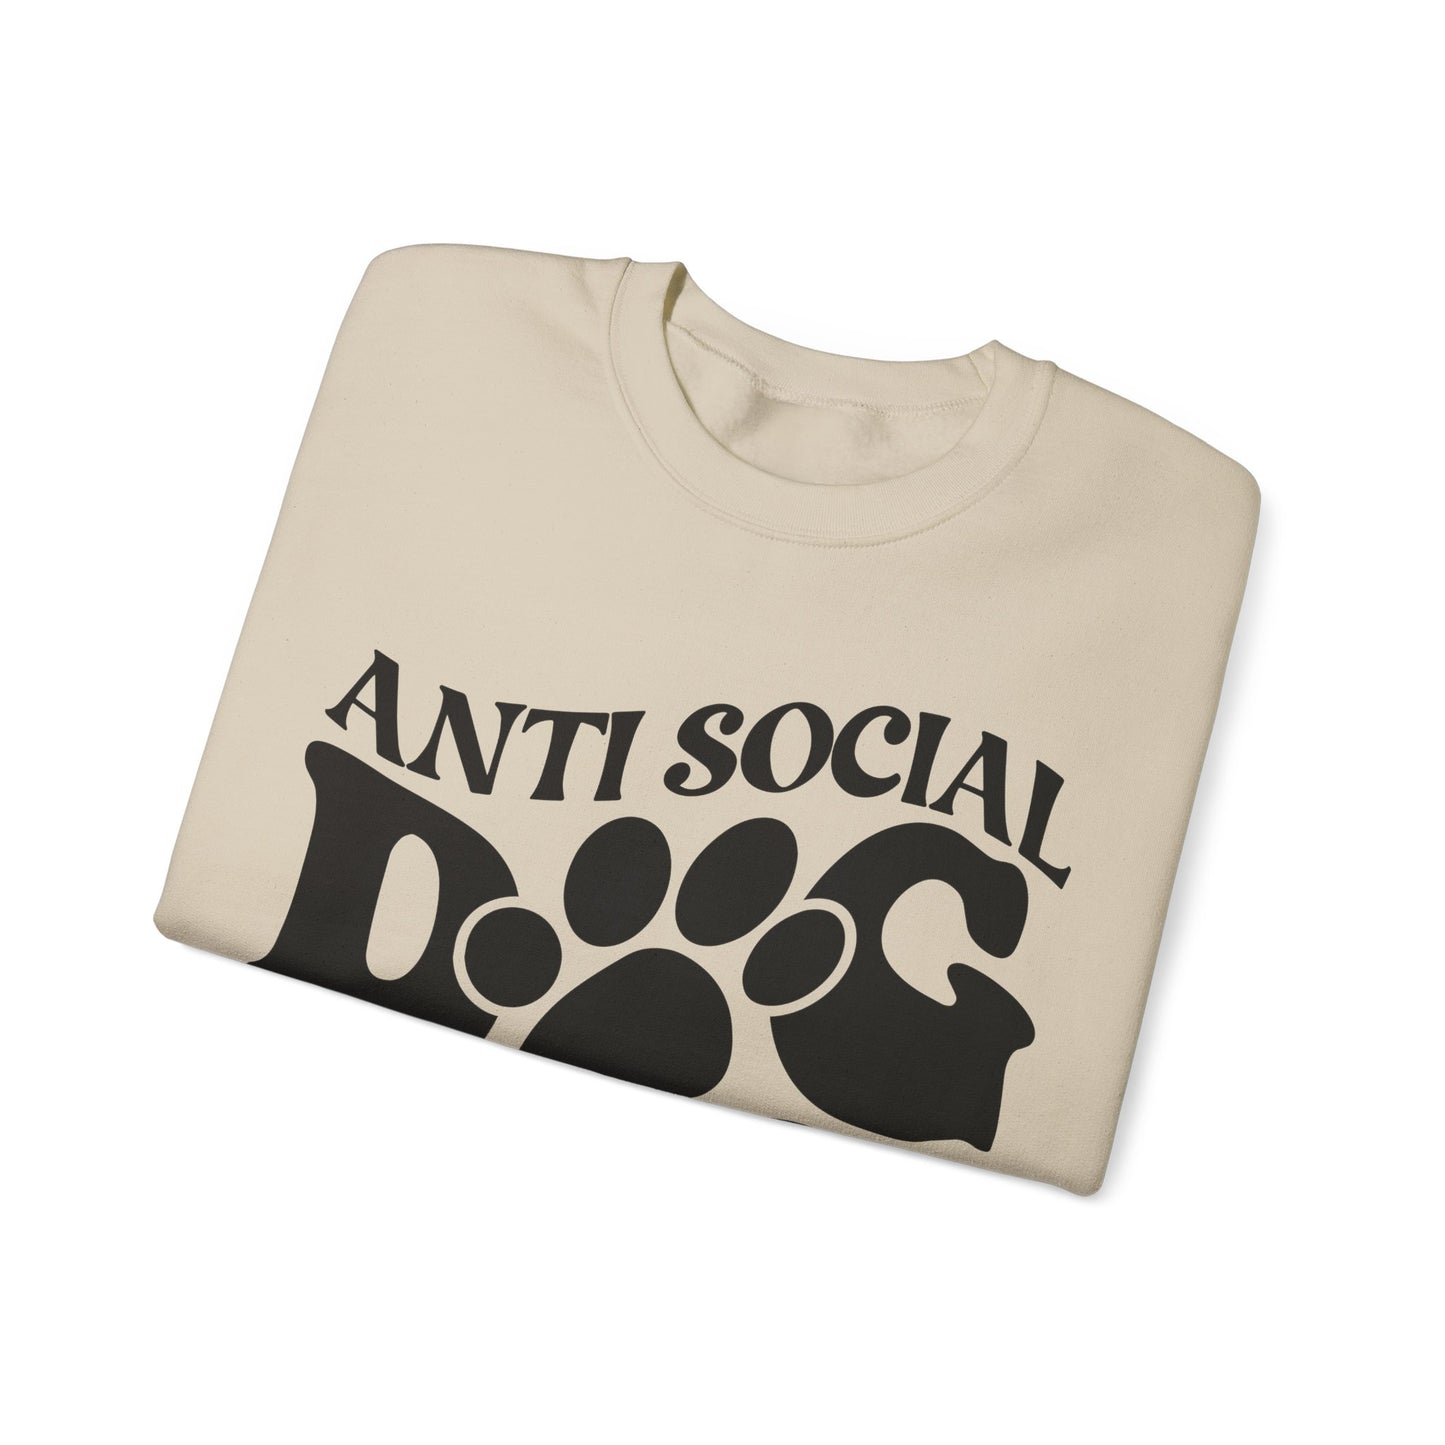 ANTISOCIAL DOG MOM - Crewneck Sweatshirt